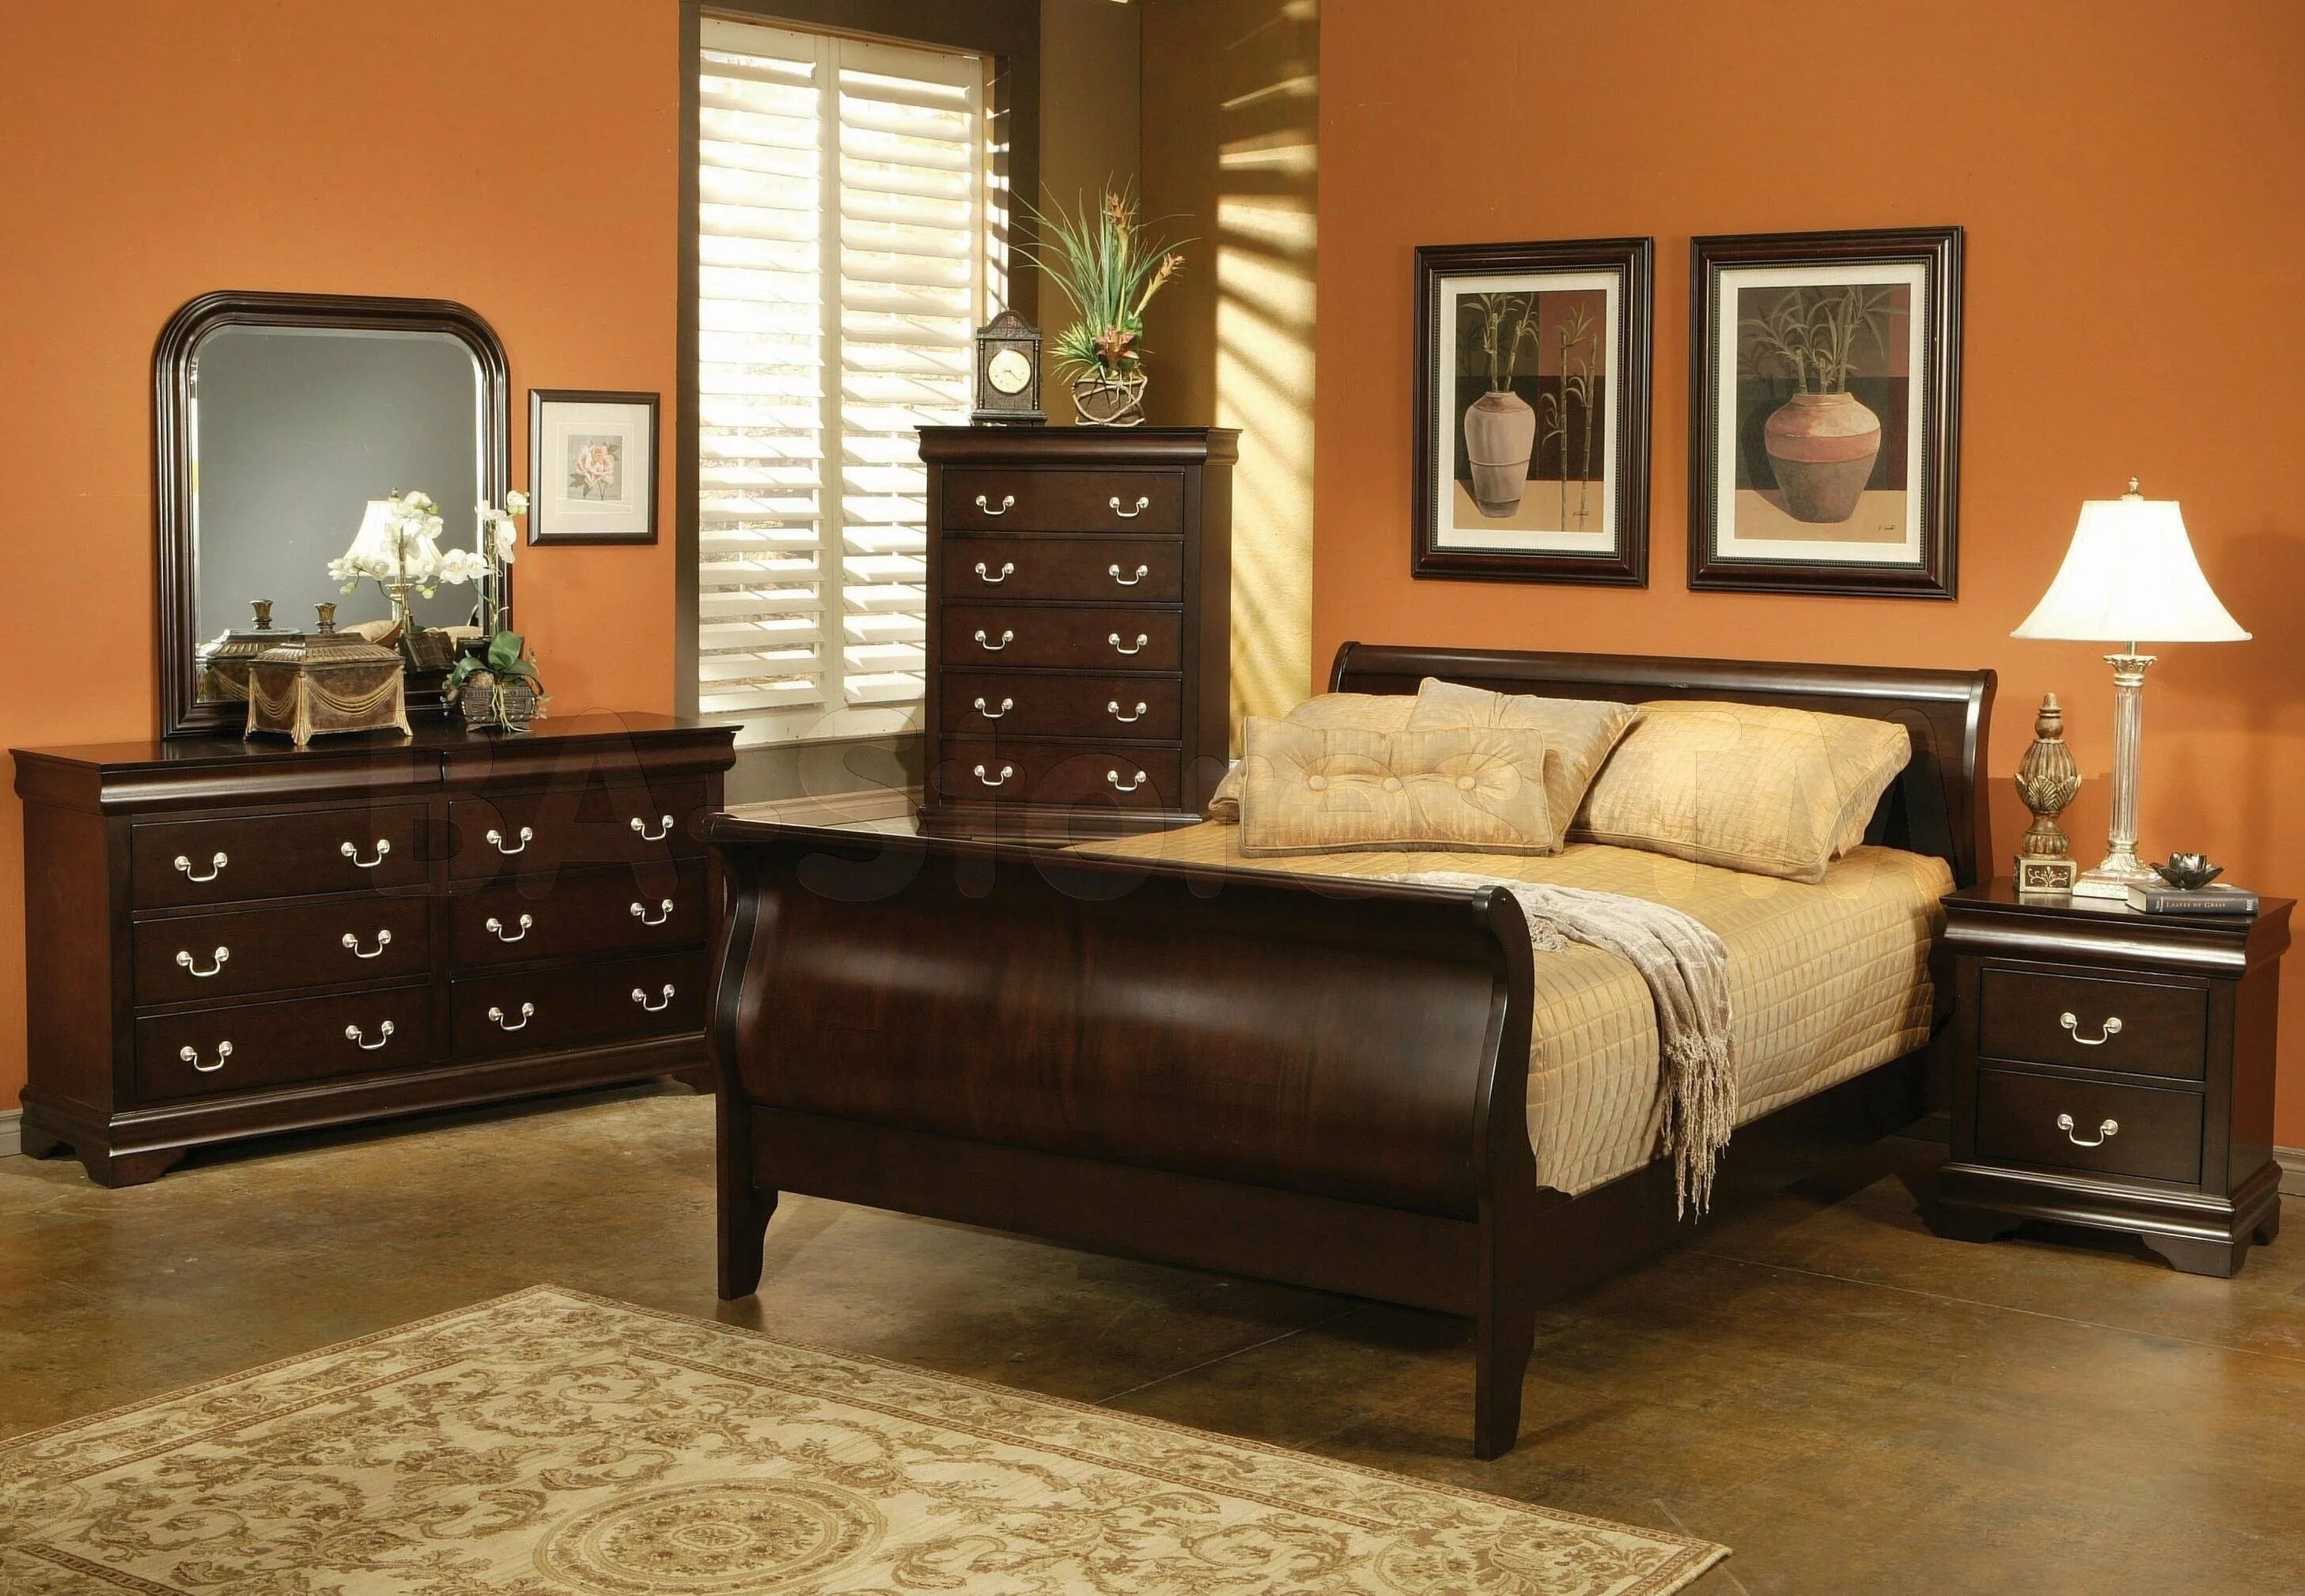 Комната коричневая мебель. Коричневая мебель в интерьере. Интерьер с темной мебелью. Темно коричневая мебель. Спальня с темной мебелью.